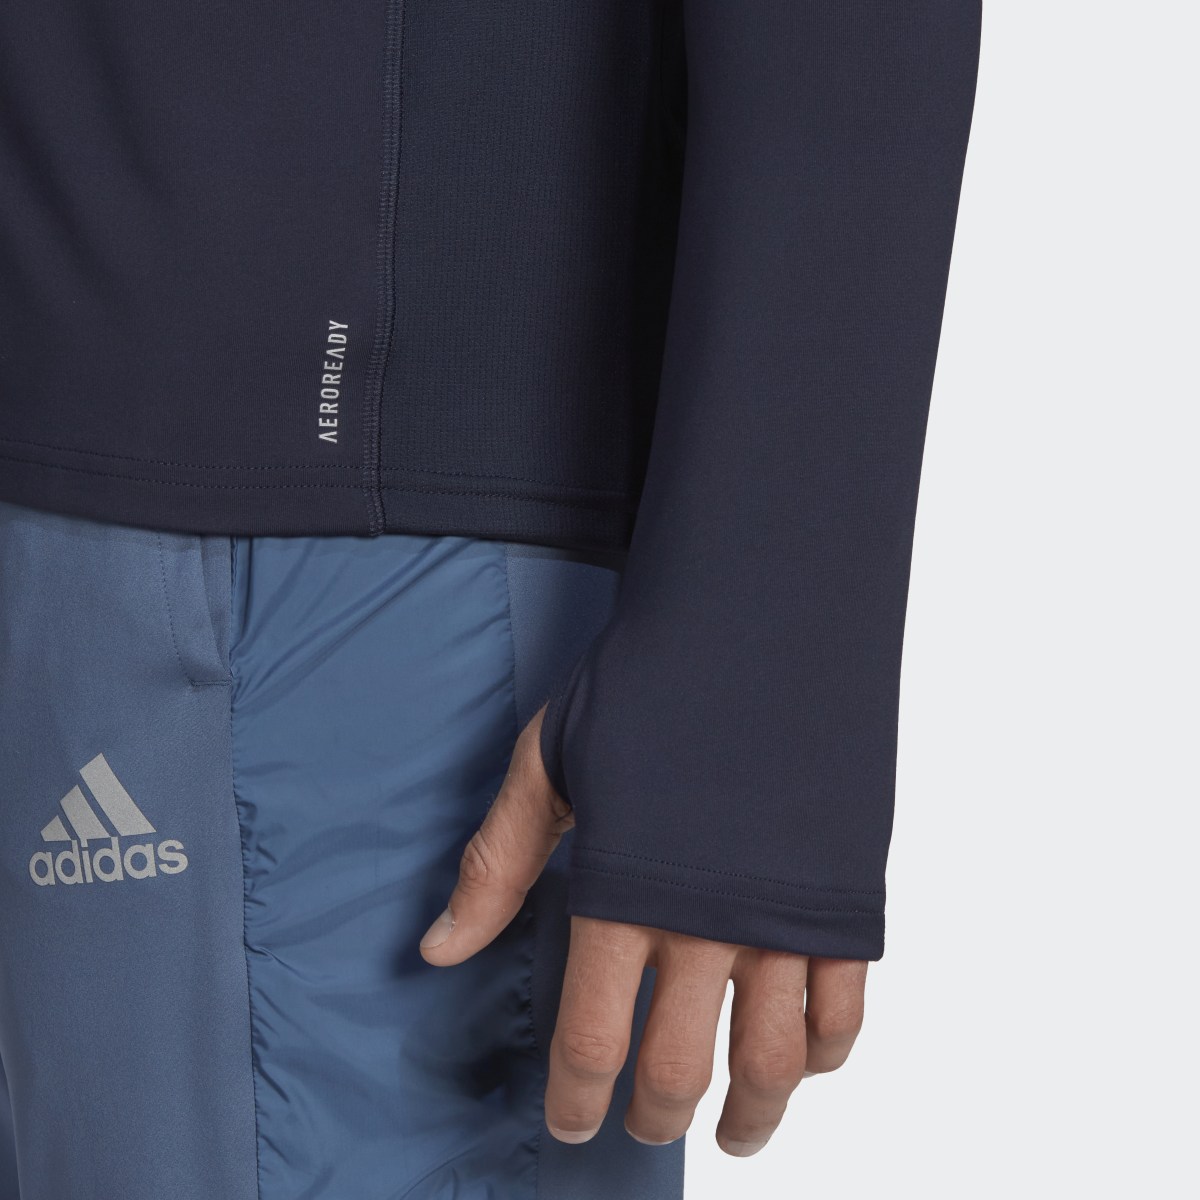 Adidas Own The Run 1/2 Zip Long Sleeve Long-Sleeve Top. 6